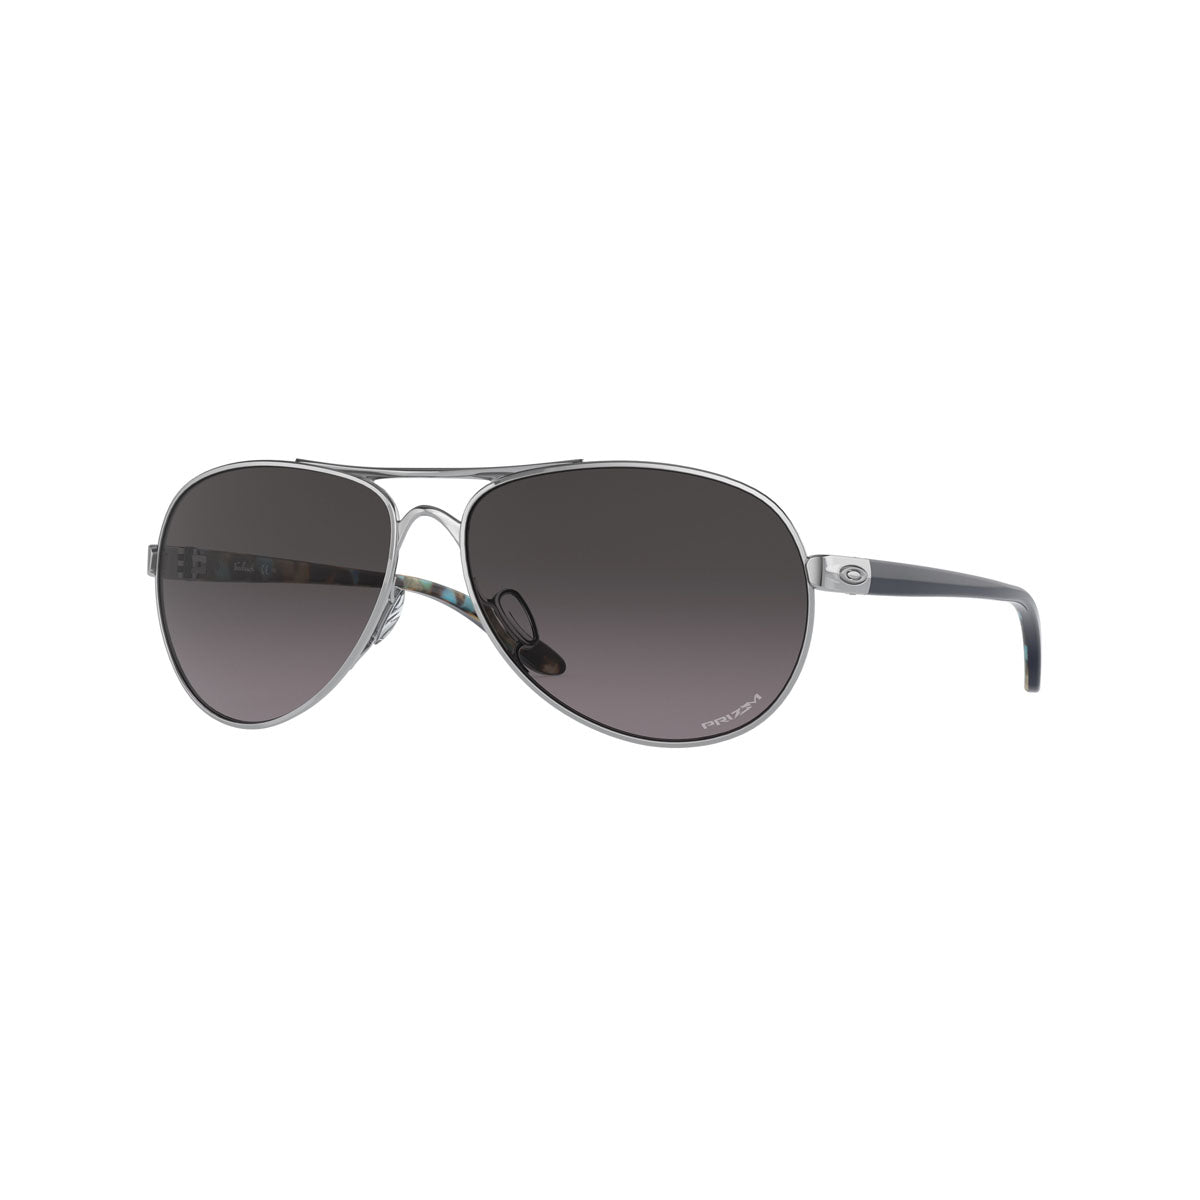 Oakley Womens Feedback Sunglasses - Polished Chrome/PRIZM Grey Gradient